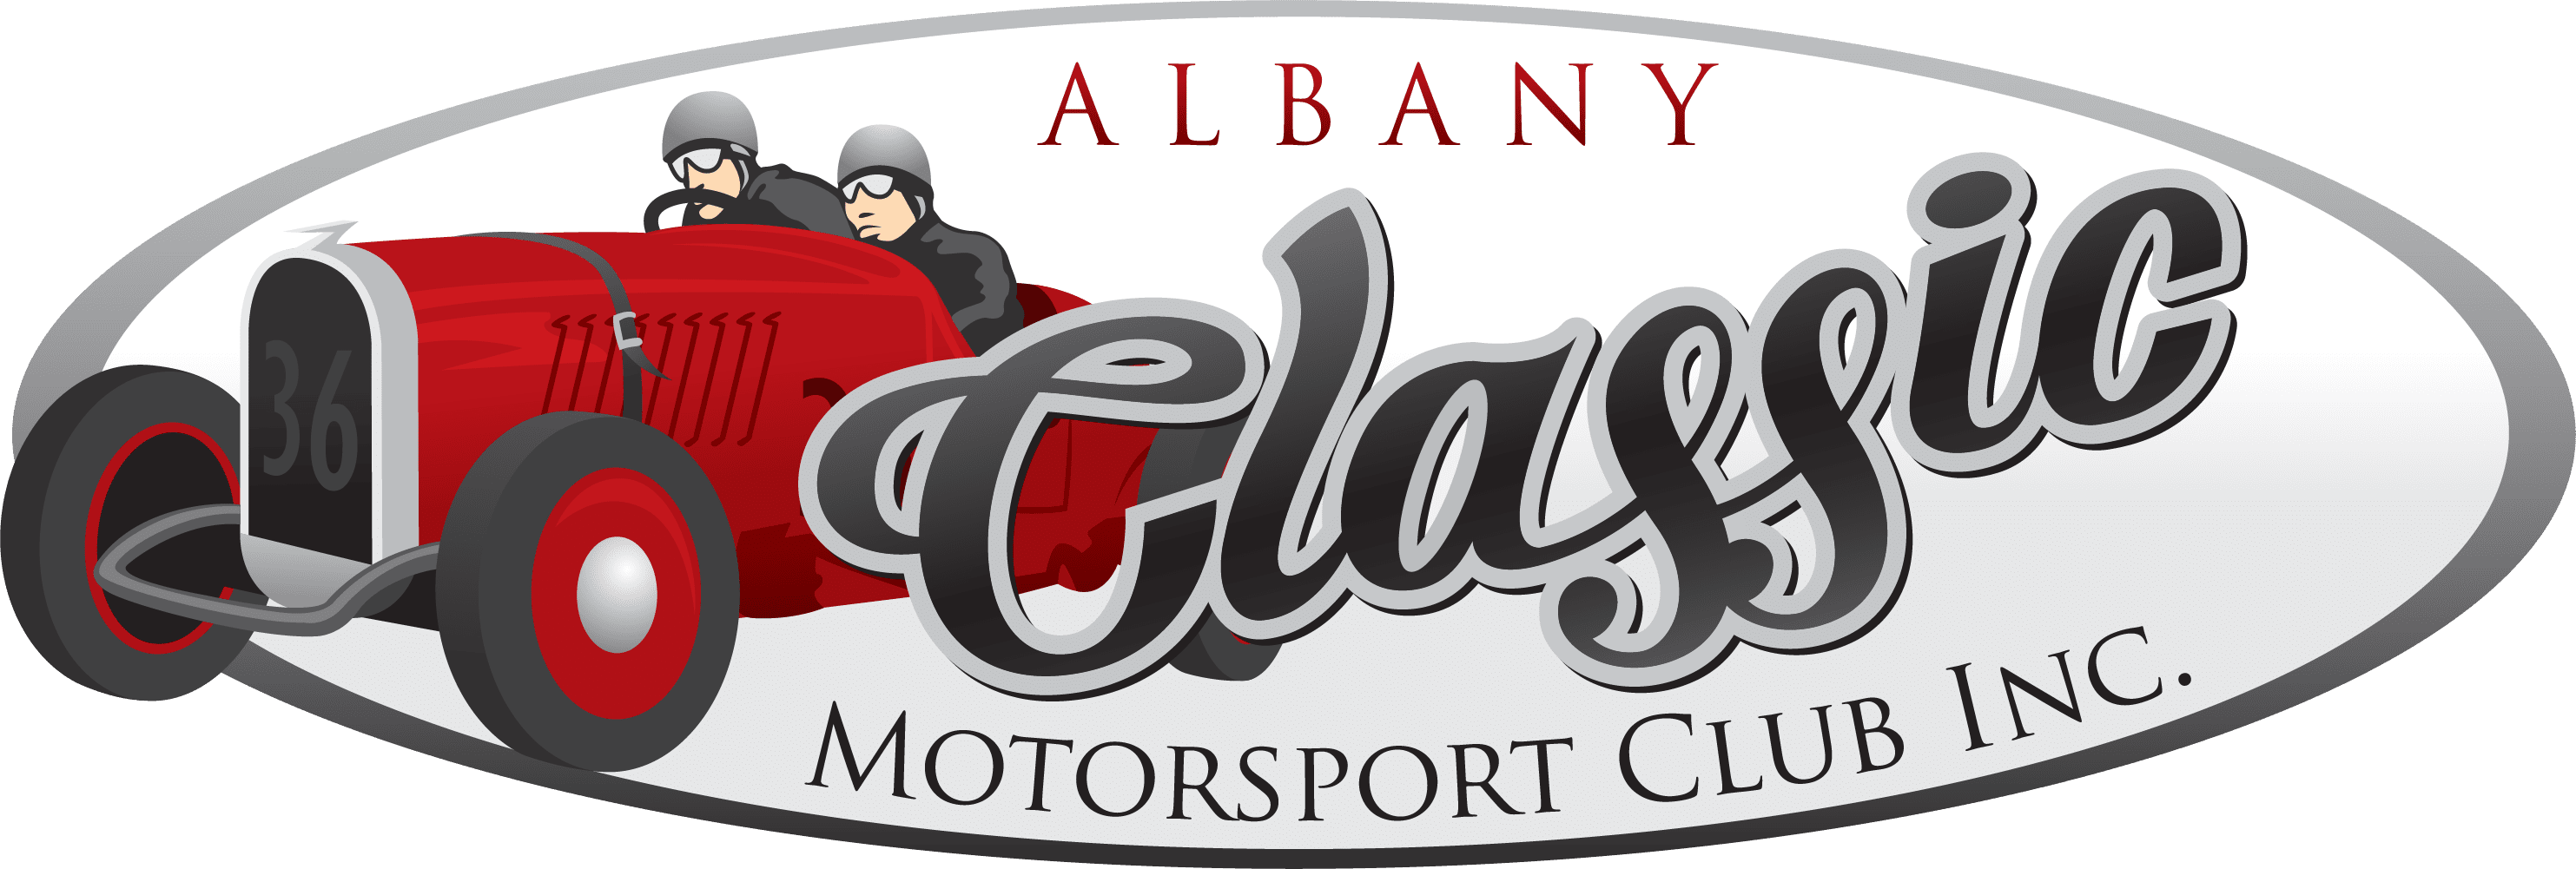 Transparent Albany Classic Motorsport Club logo